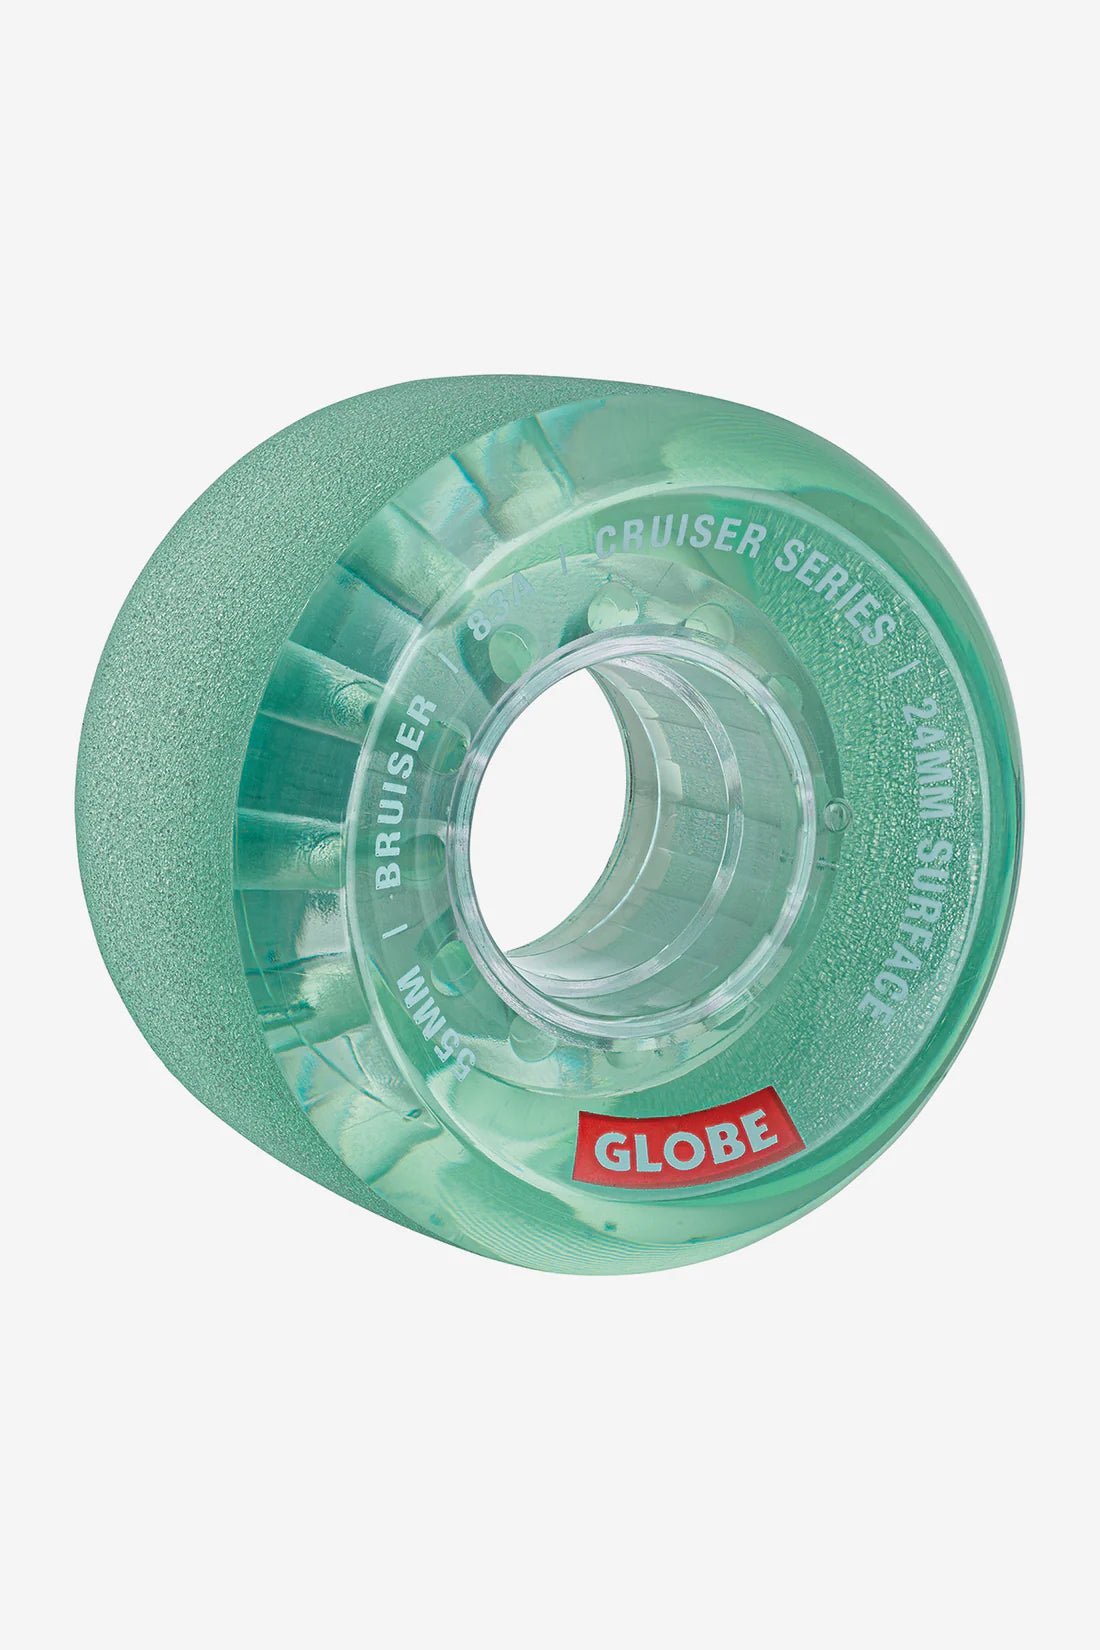 Globe Bruiser Cruiser Wheels 55mm Clear Aqua - SkatebruhSG